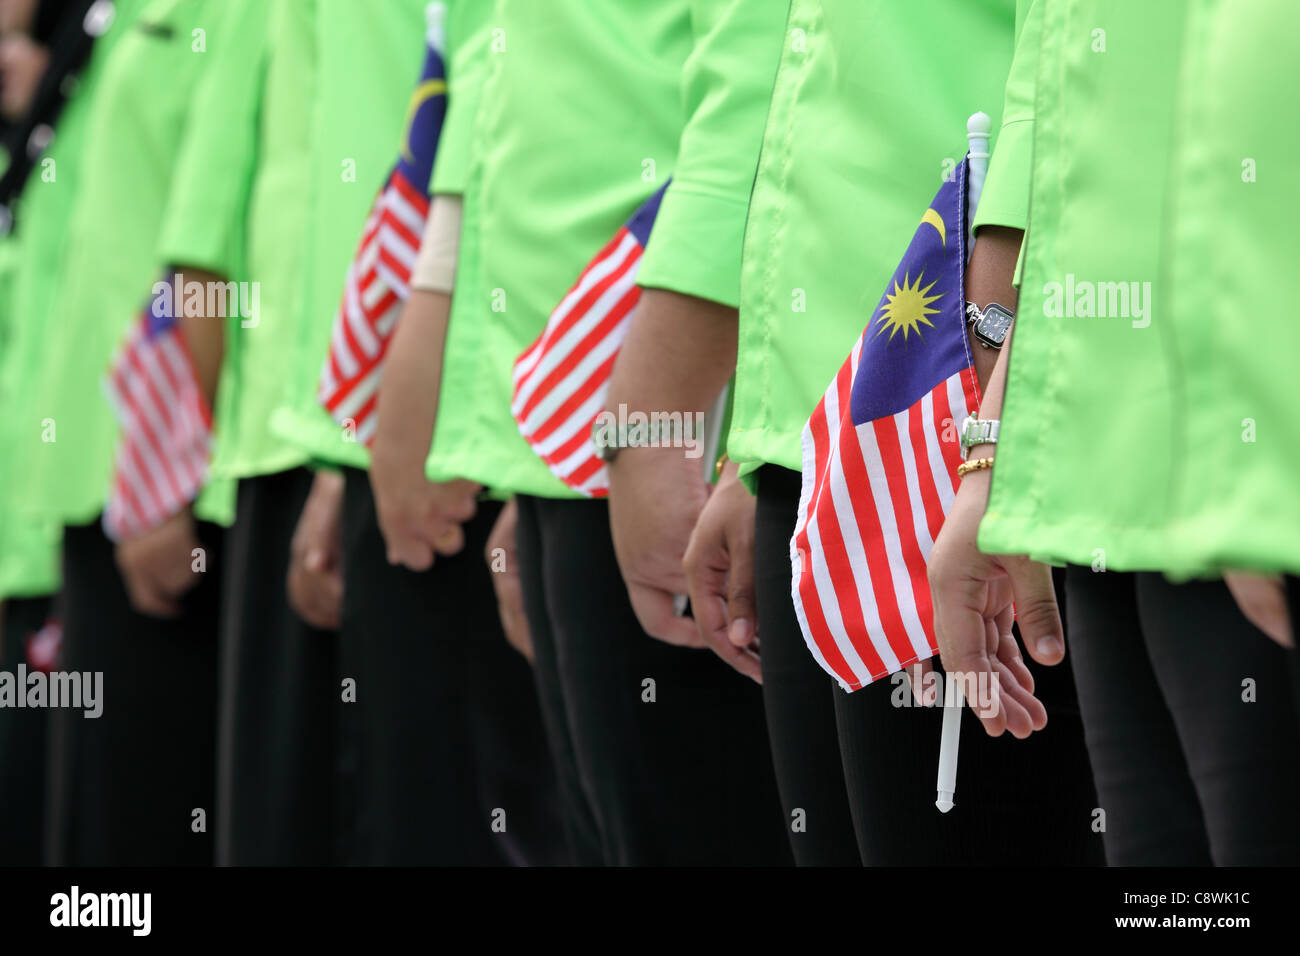 Women in uniform holding Malaysian flags during Melaka Independence day celebrations. Melaka, Malaysia, Southeast Asia, Asia Stock Photo